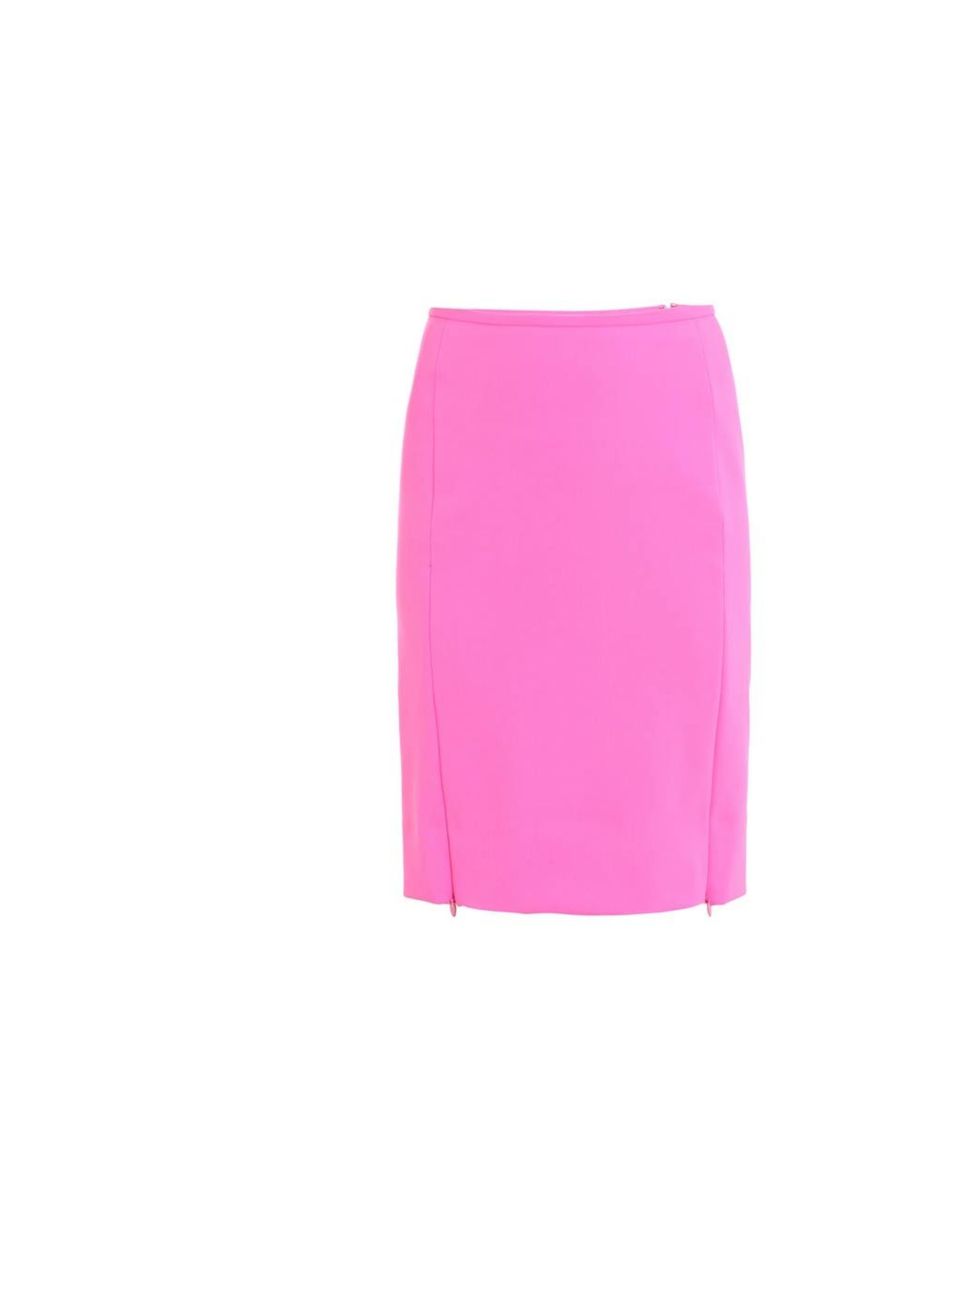 <p>Diane von Furstenberg 'Rita' skirt, £222, at Matches Fashion</p><p><a href="http://shopping.elleuk.com/browse/skirts?fts=diane+von+furstenberg">BUY NOW</a></p>